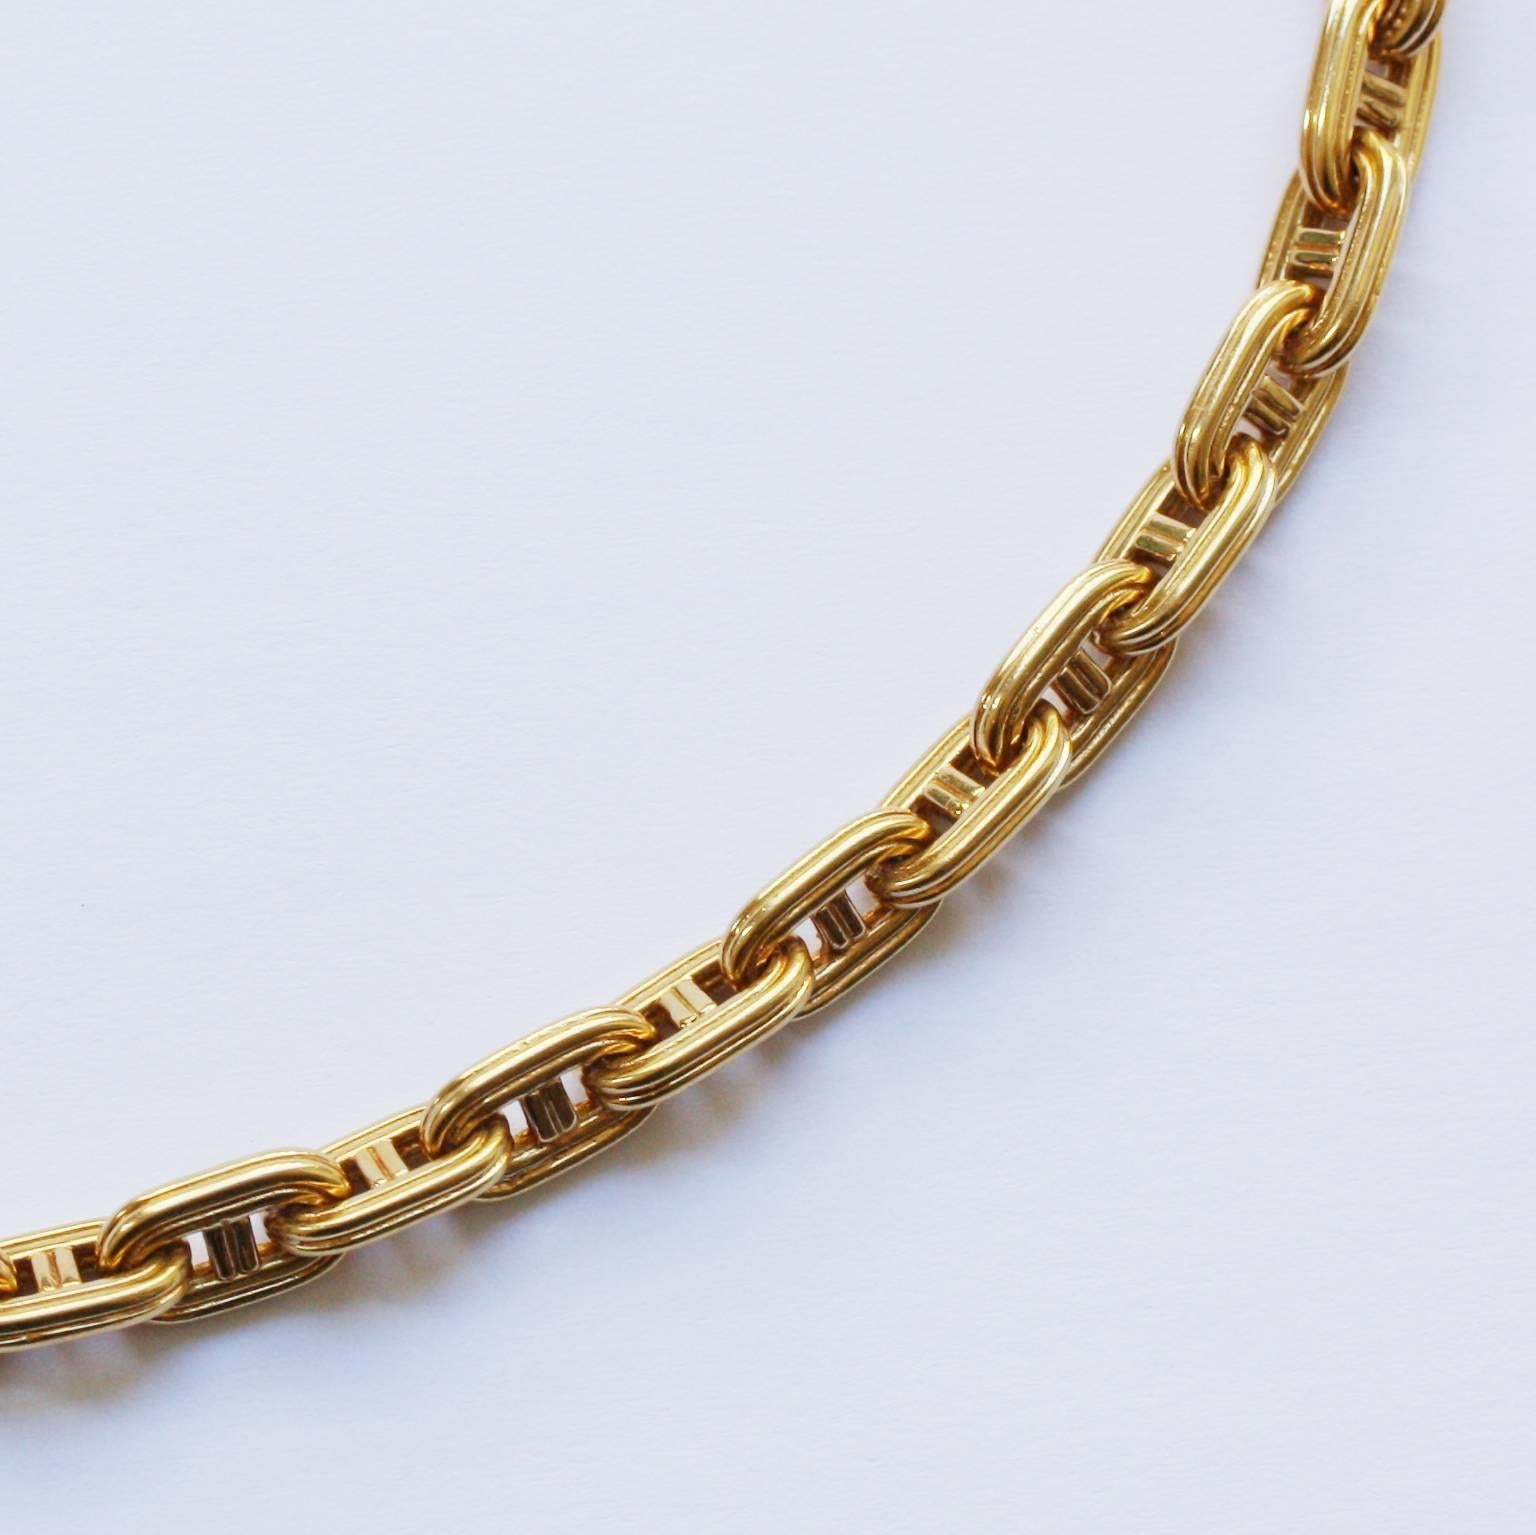 An 18 carat gold necklace by Georges Lenfant for Hermès signed and numbered: Hermès, 11290, model: Chaîne d’ancre, deux fils, circa 1970.

weight: 56.8 gram
length: 40 cm.